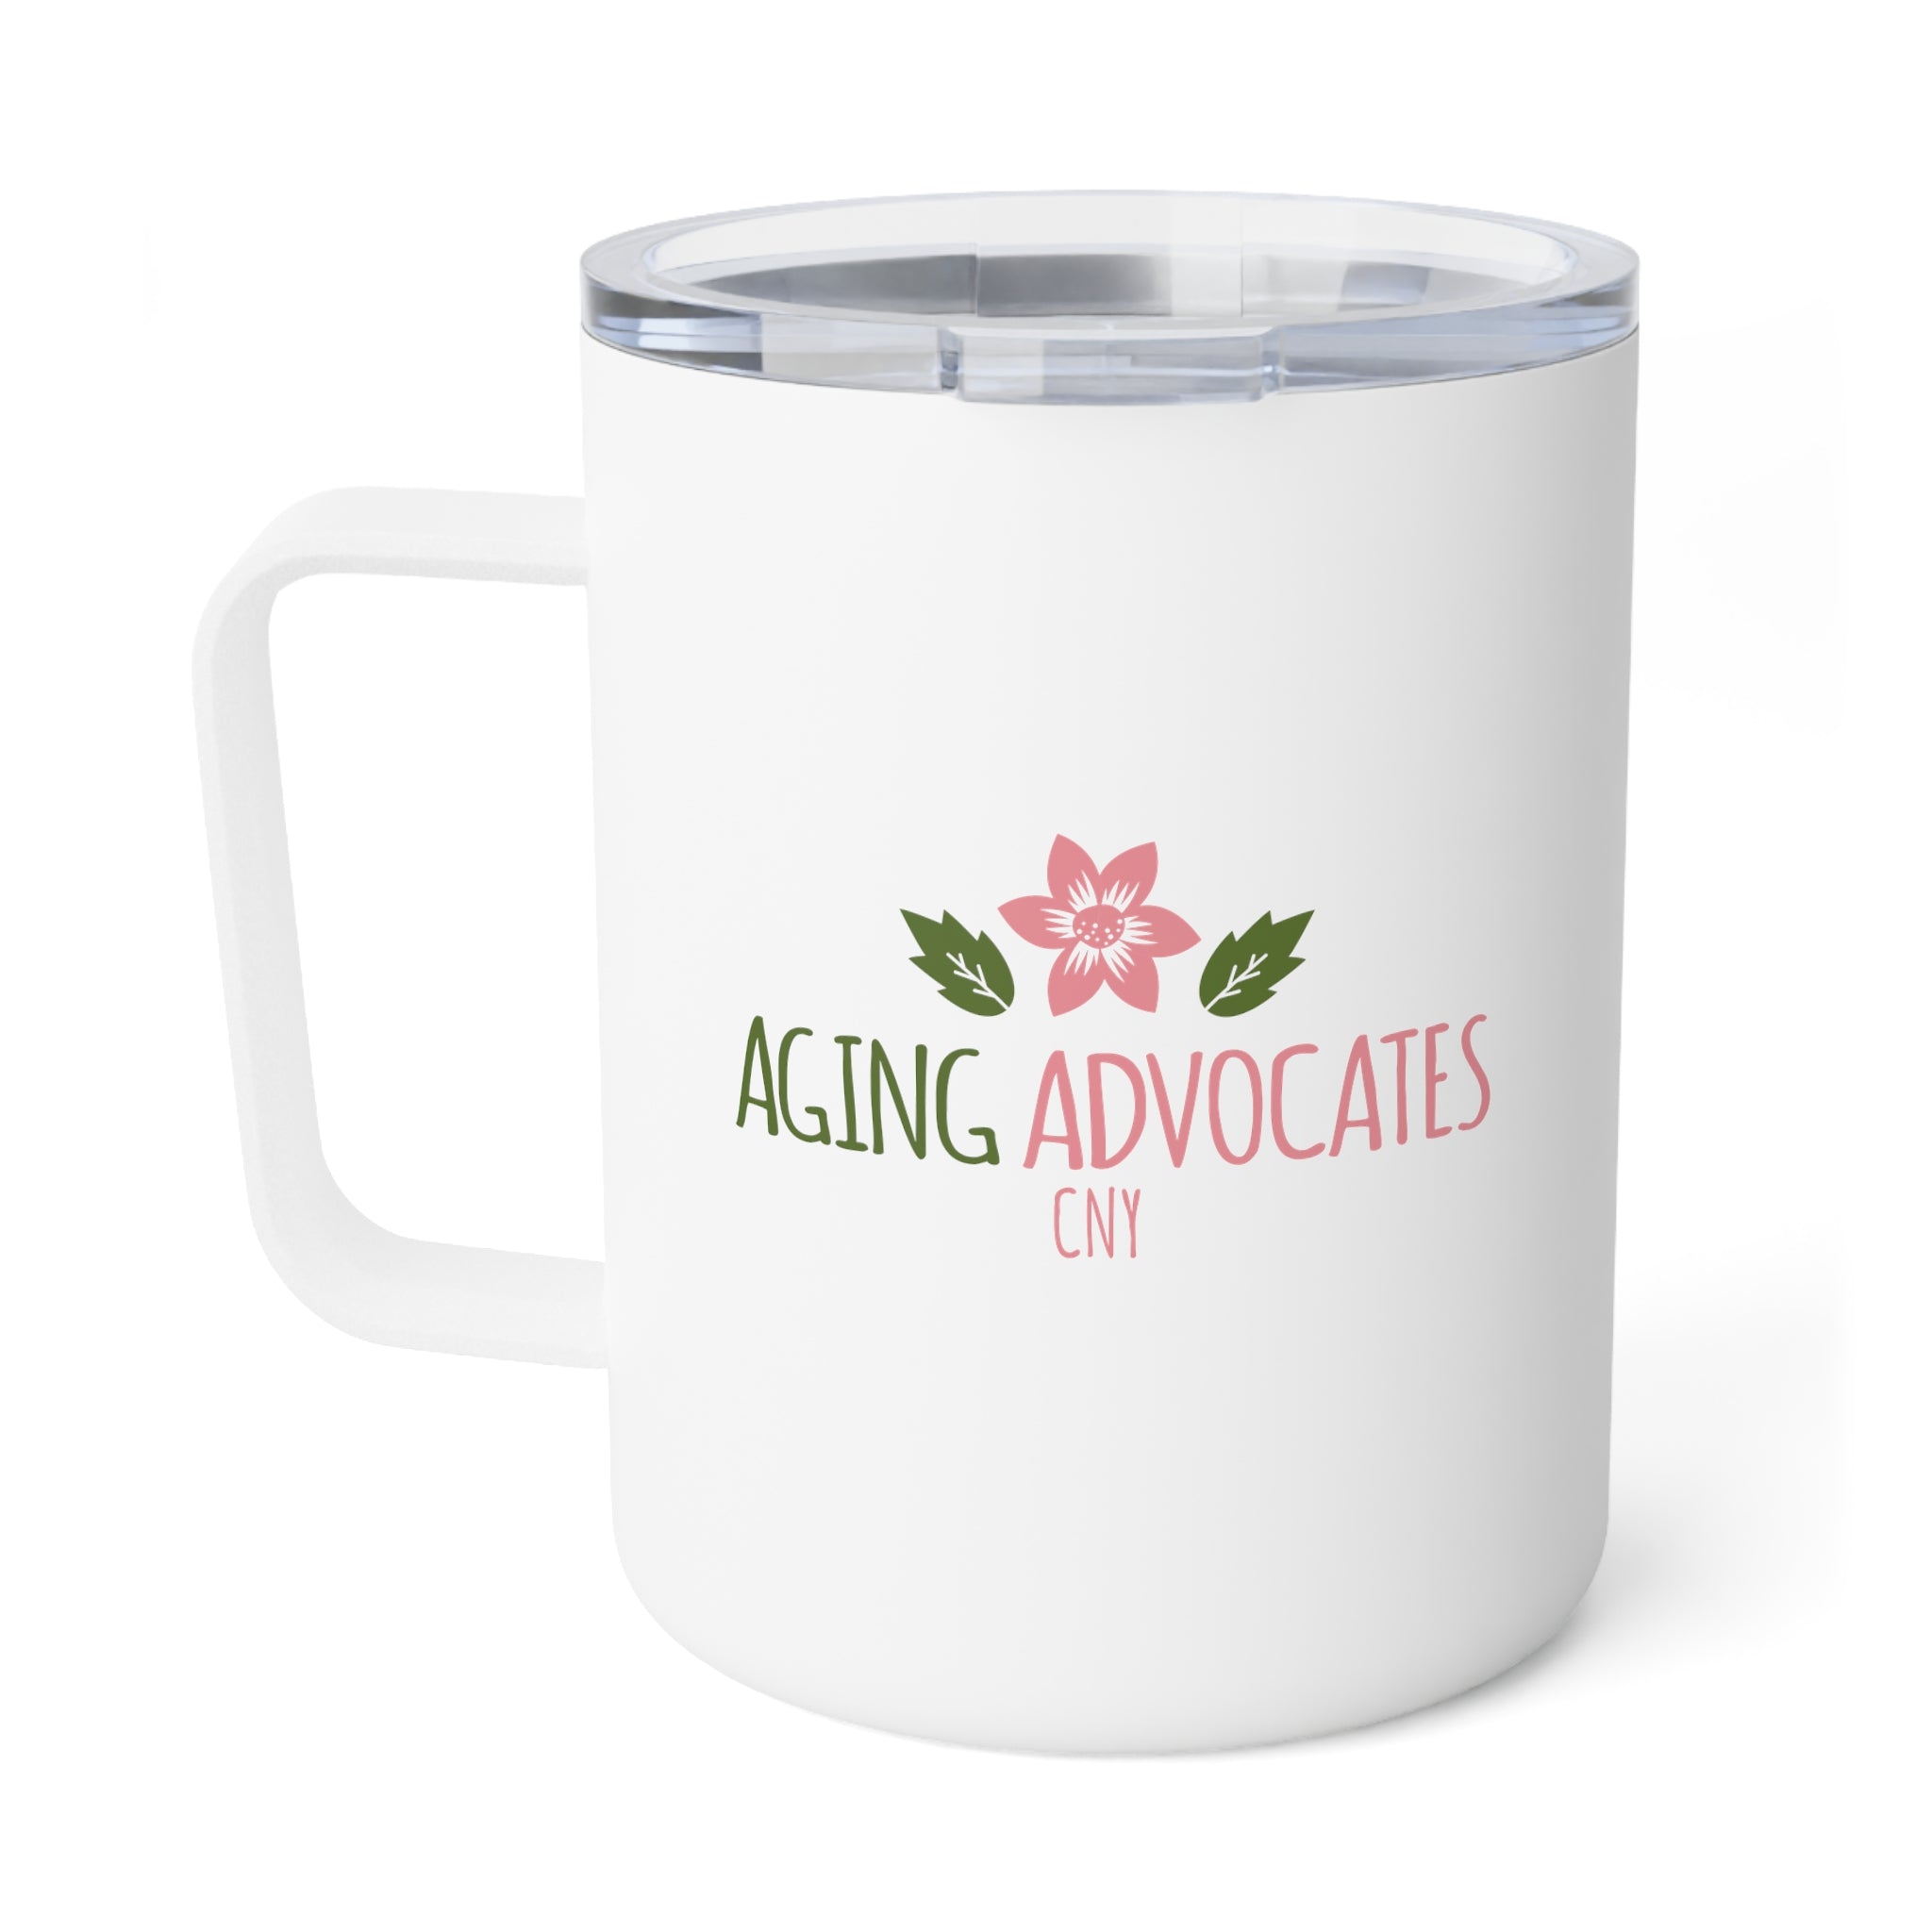 Aging Advocates Insulated Coffee Mug, 10oz